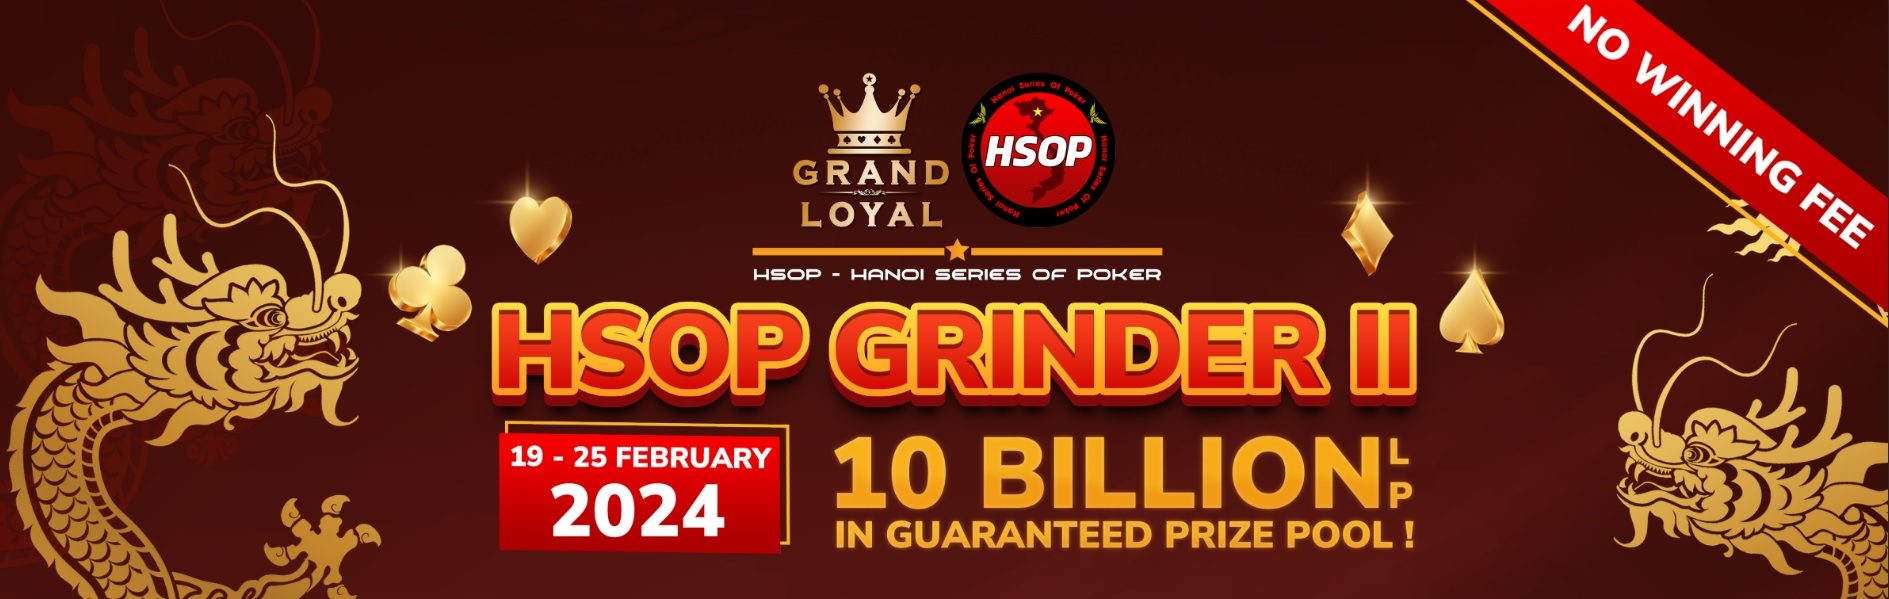 HSOP GRINDER II 10 BILLION LP IN GUARATEED PRIZE POOL !